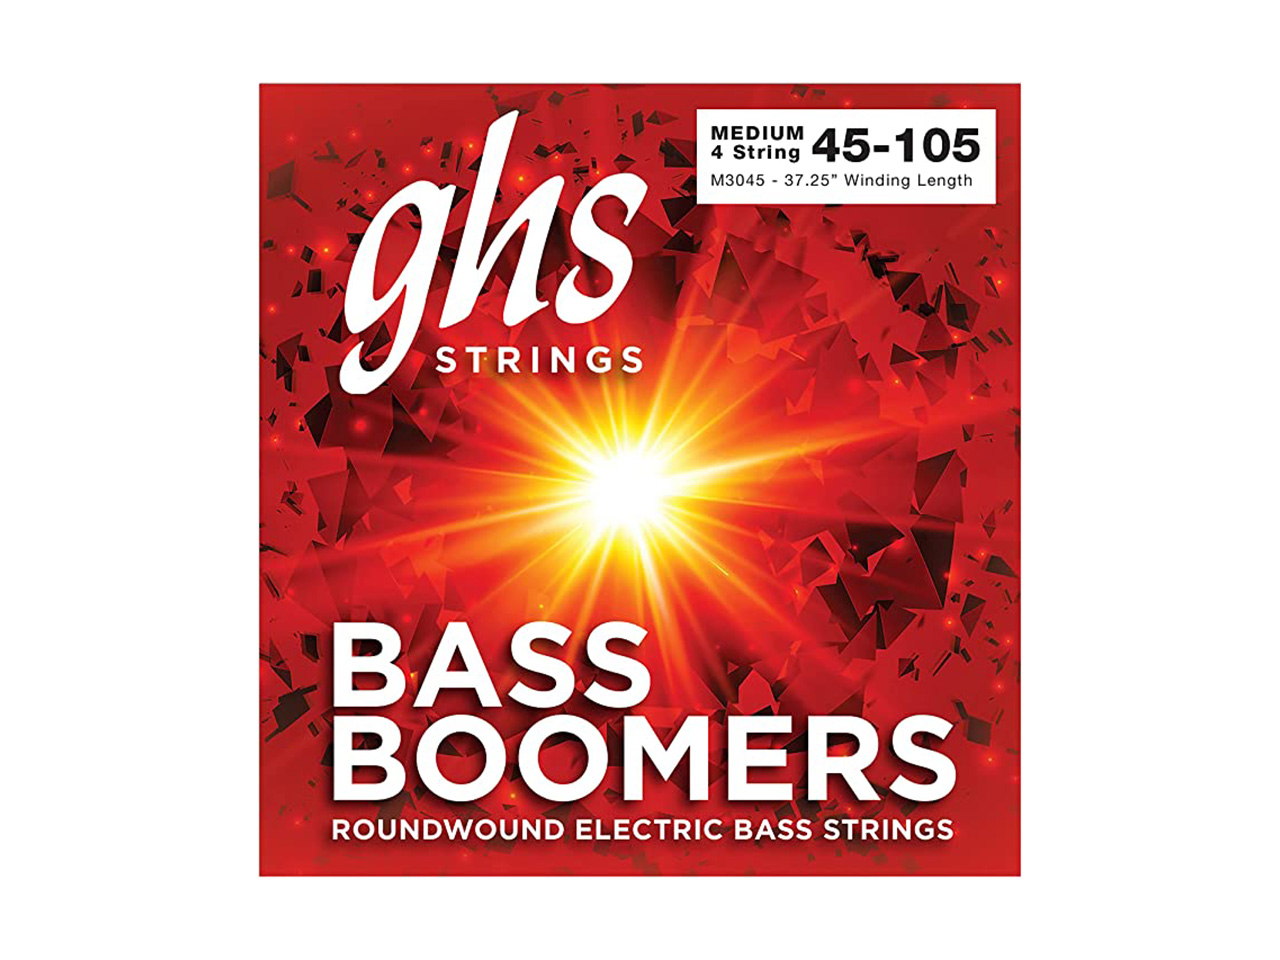 ghs(ジーエイチエス) Bass Boomers® Medium M3045 / 45-105 (エレキベース弦/Long Scale)